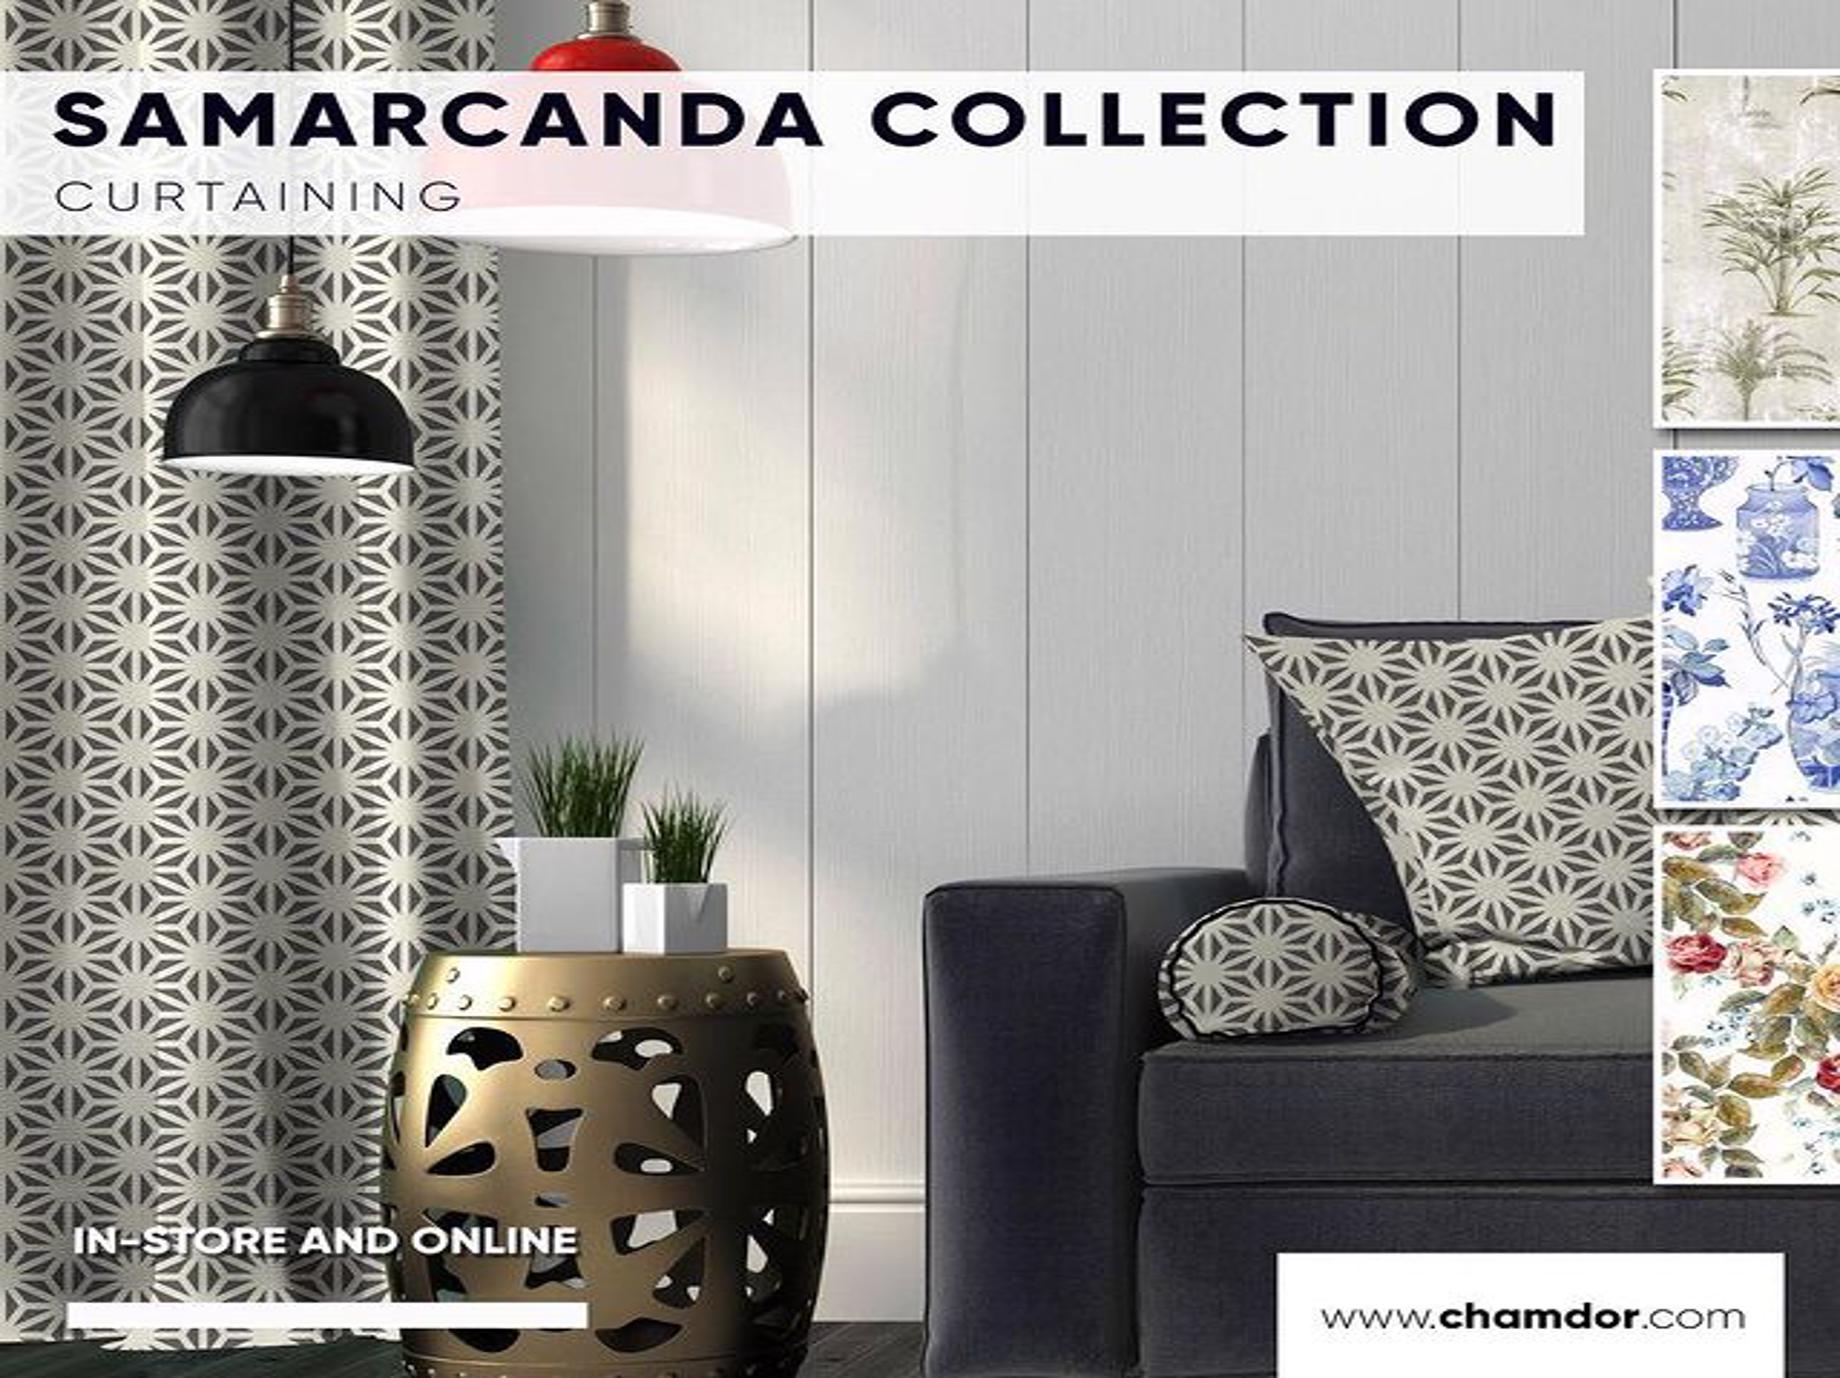 Samarcanda Collection